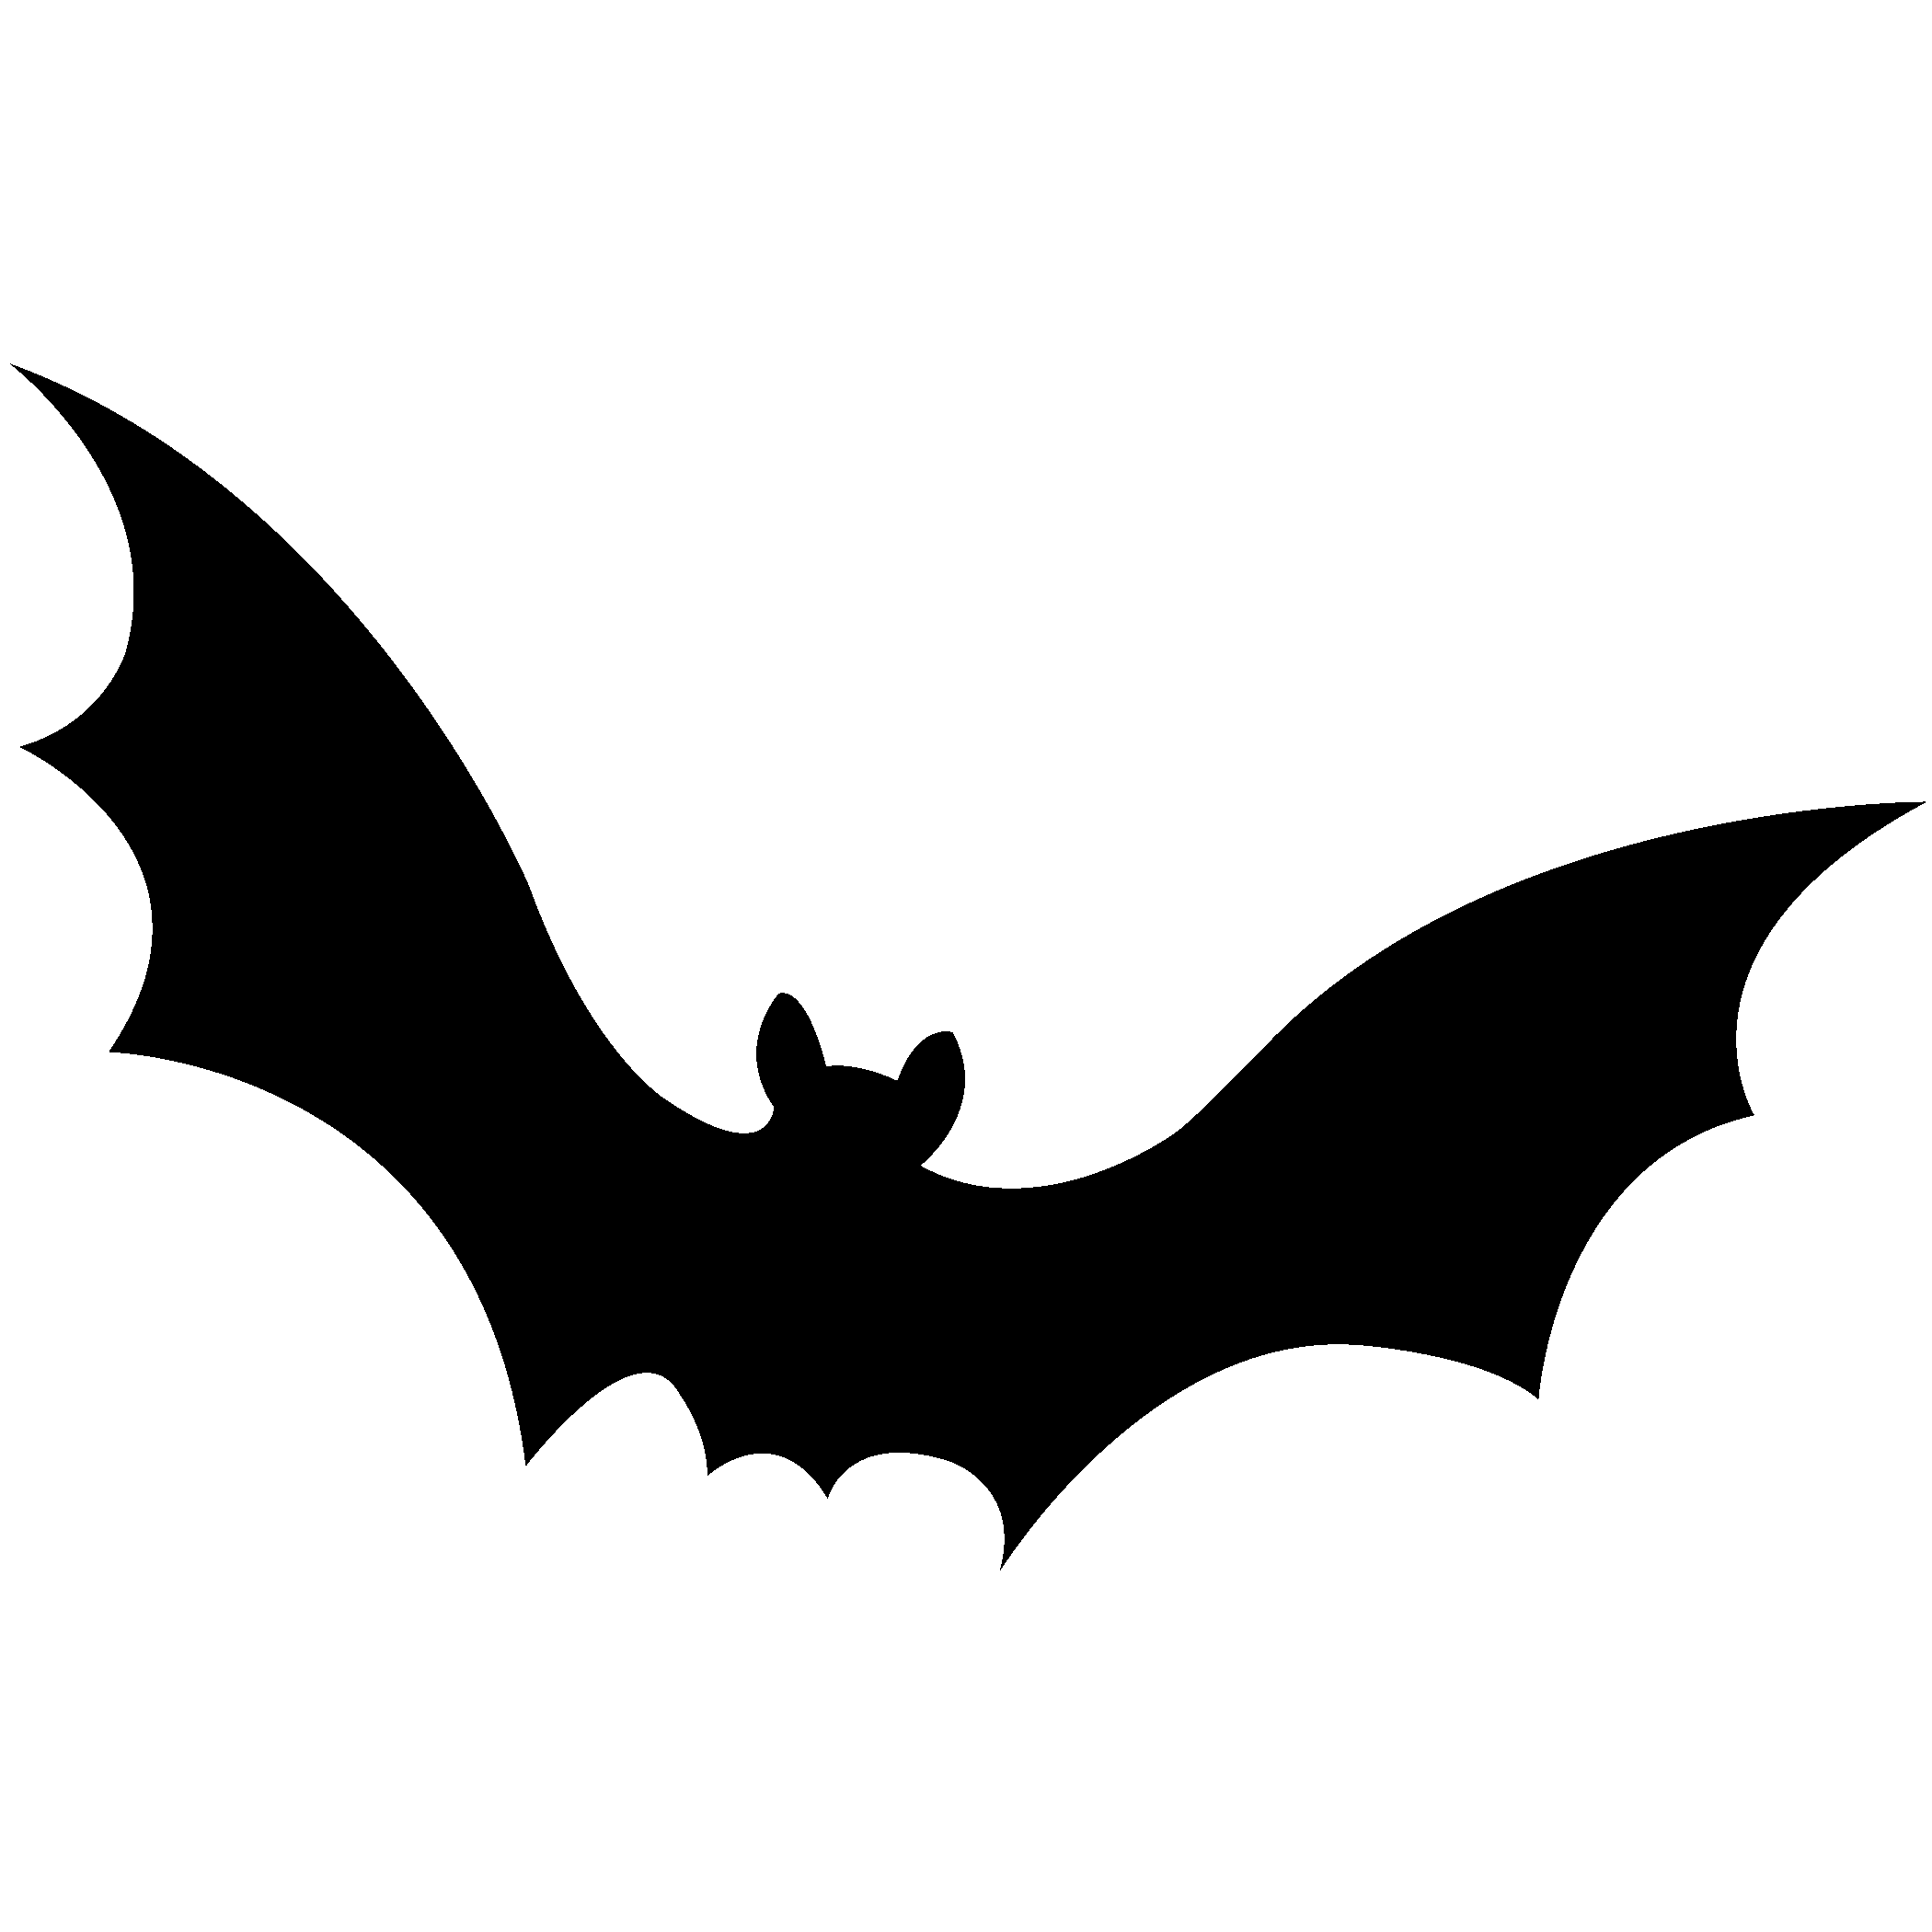 Free Bat Outline Cliparts, Download Free Bat Outline Cliparts png